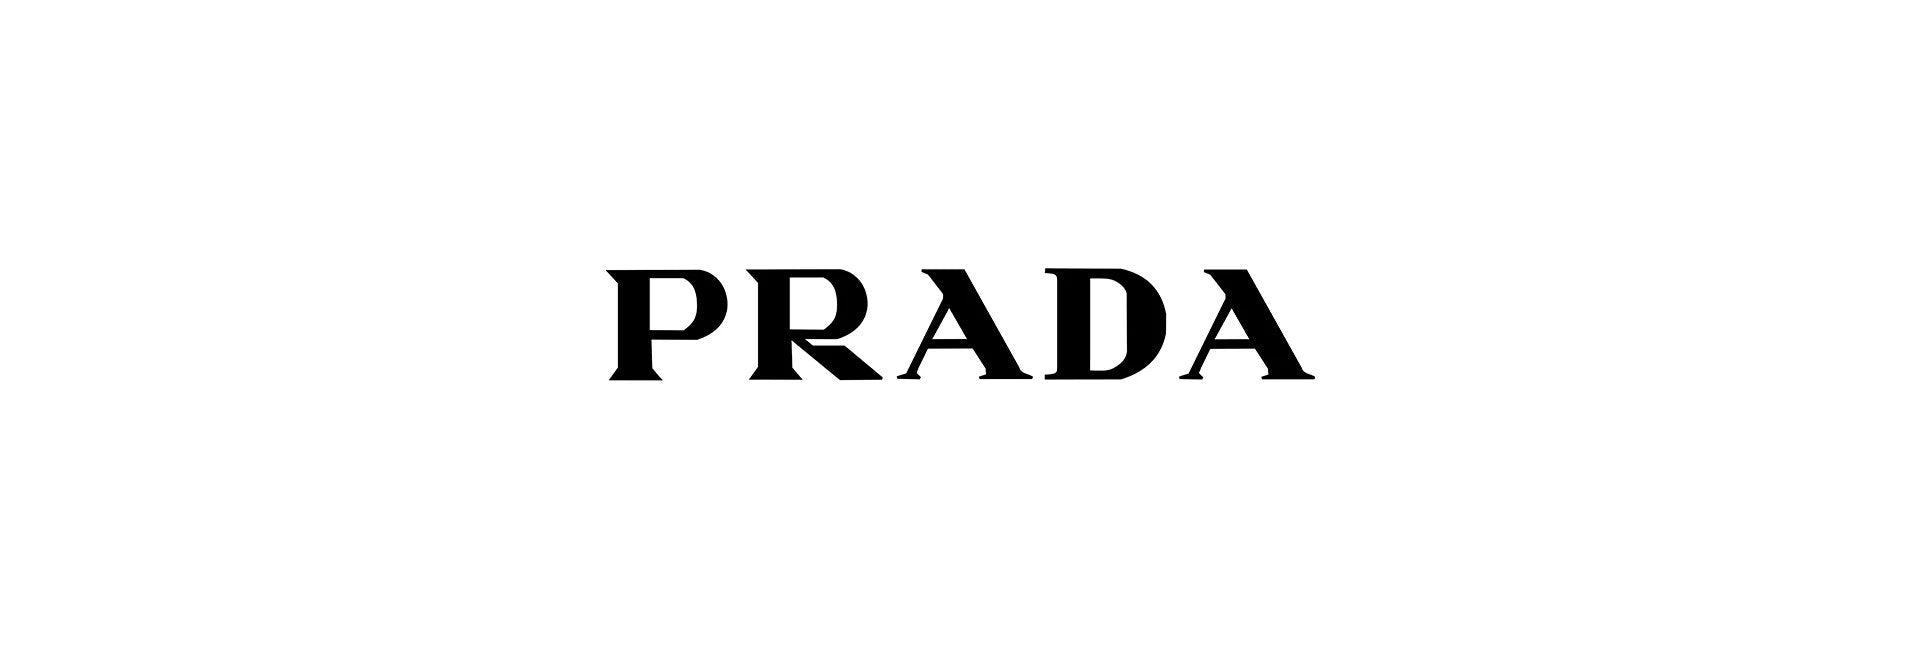 PRADA on X: Prada store inside the prestigious Greenbelt Ayala